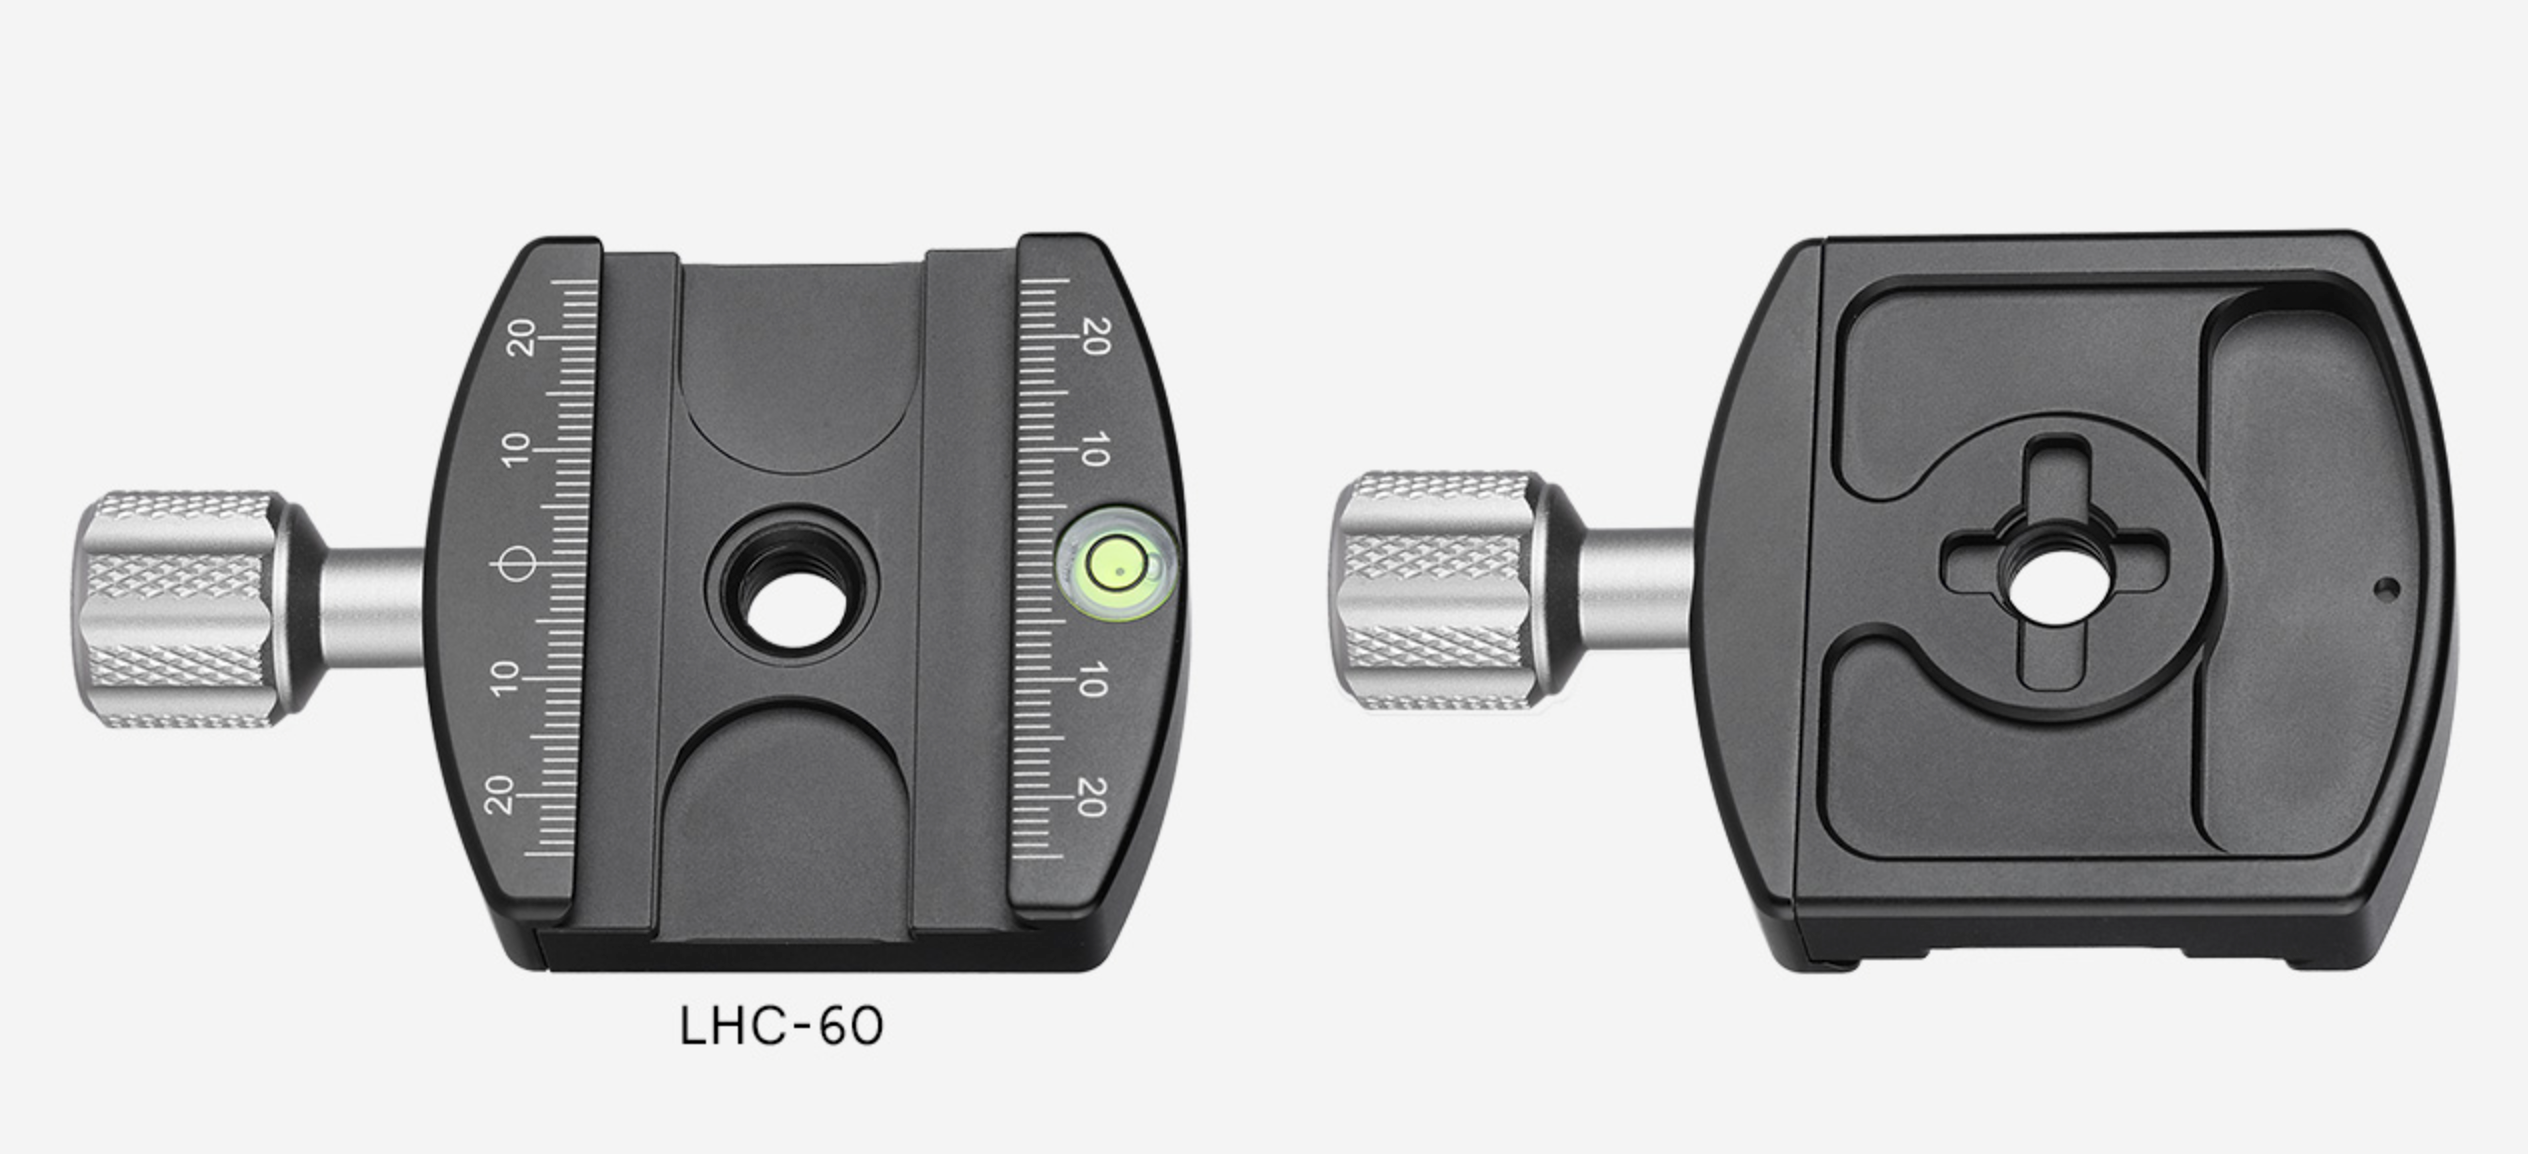 Leofoto LHC-60 60mm Screw-Knob Pro Clamp with Plate/ARCA/RRS Ball Head Compatible